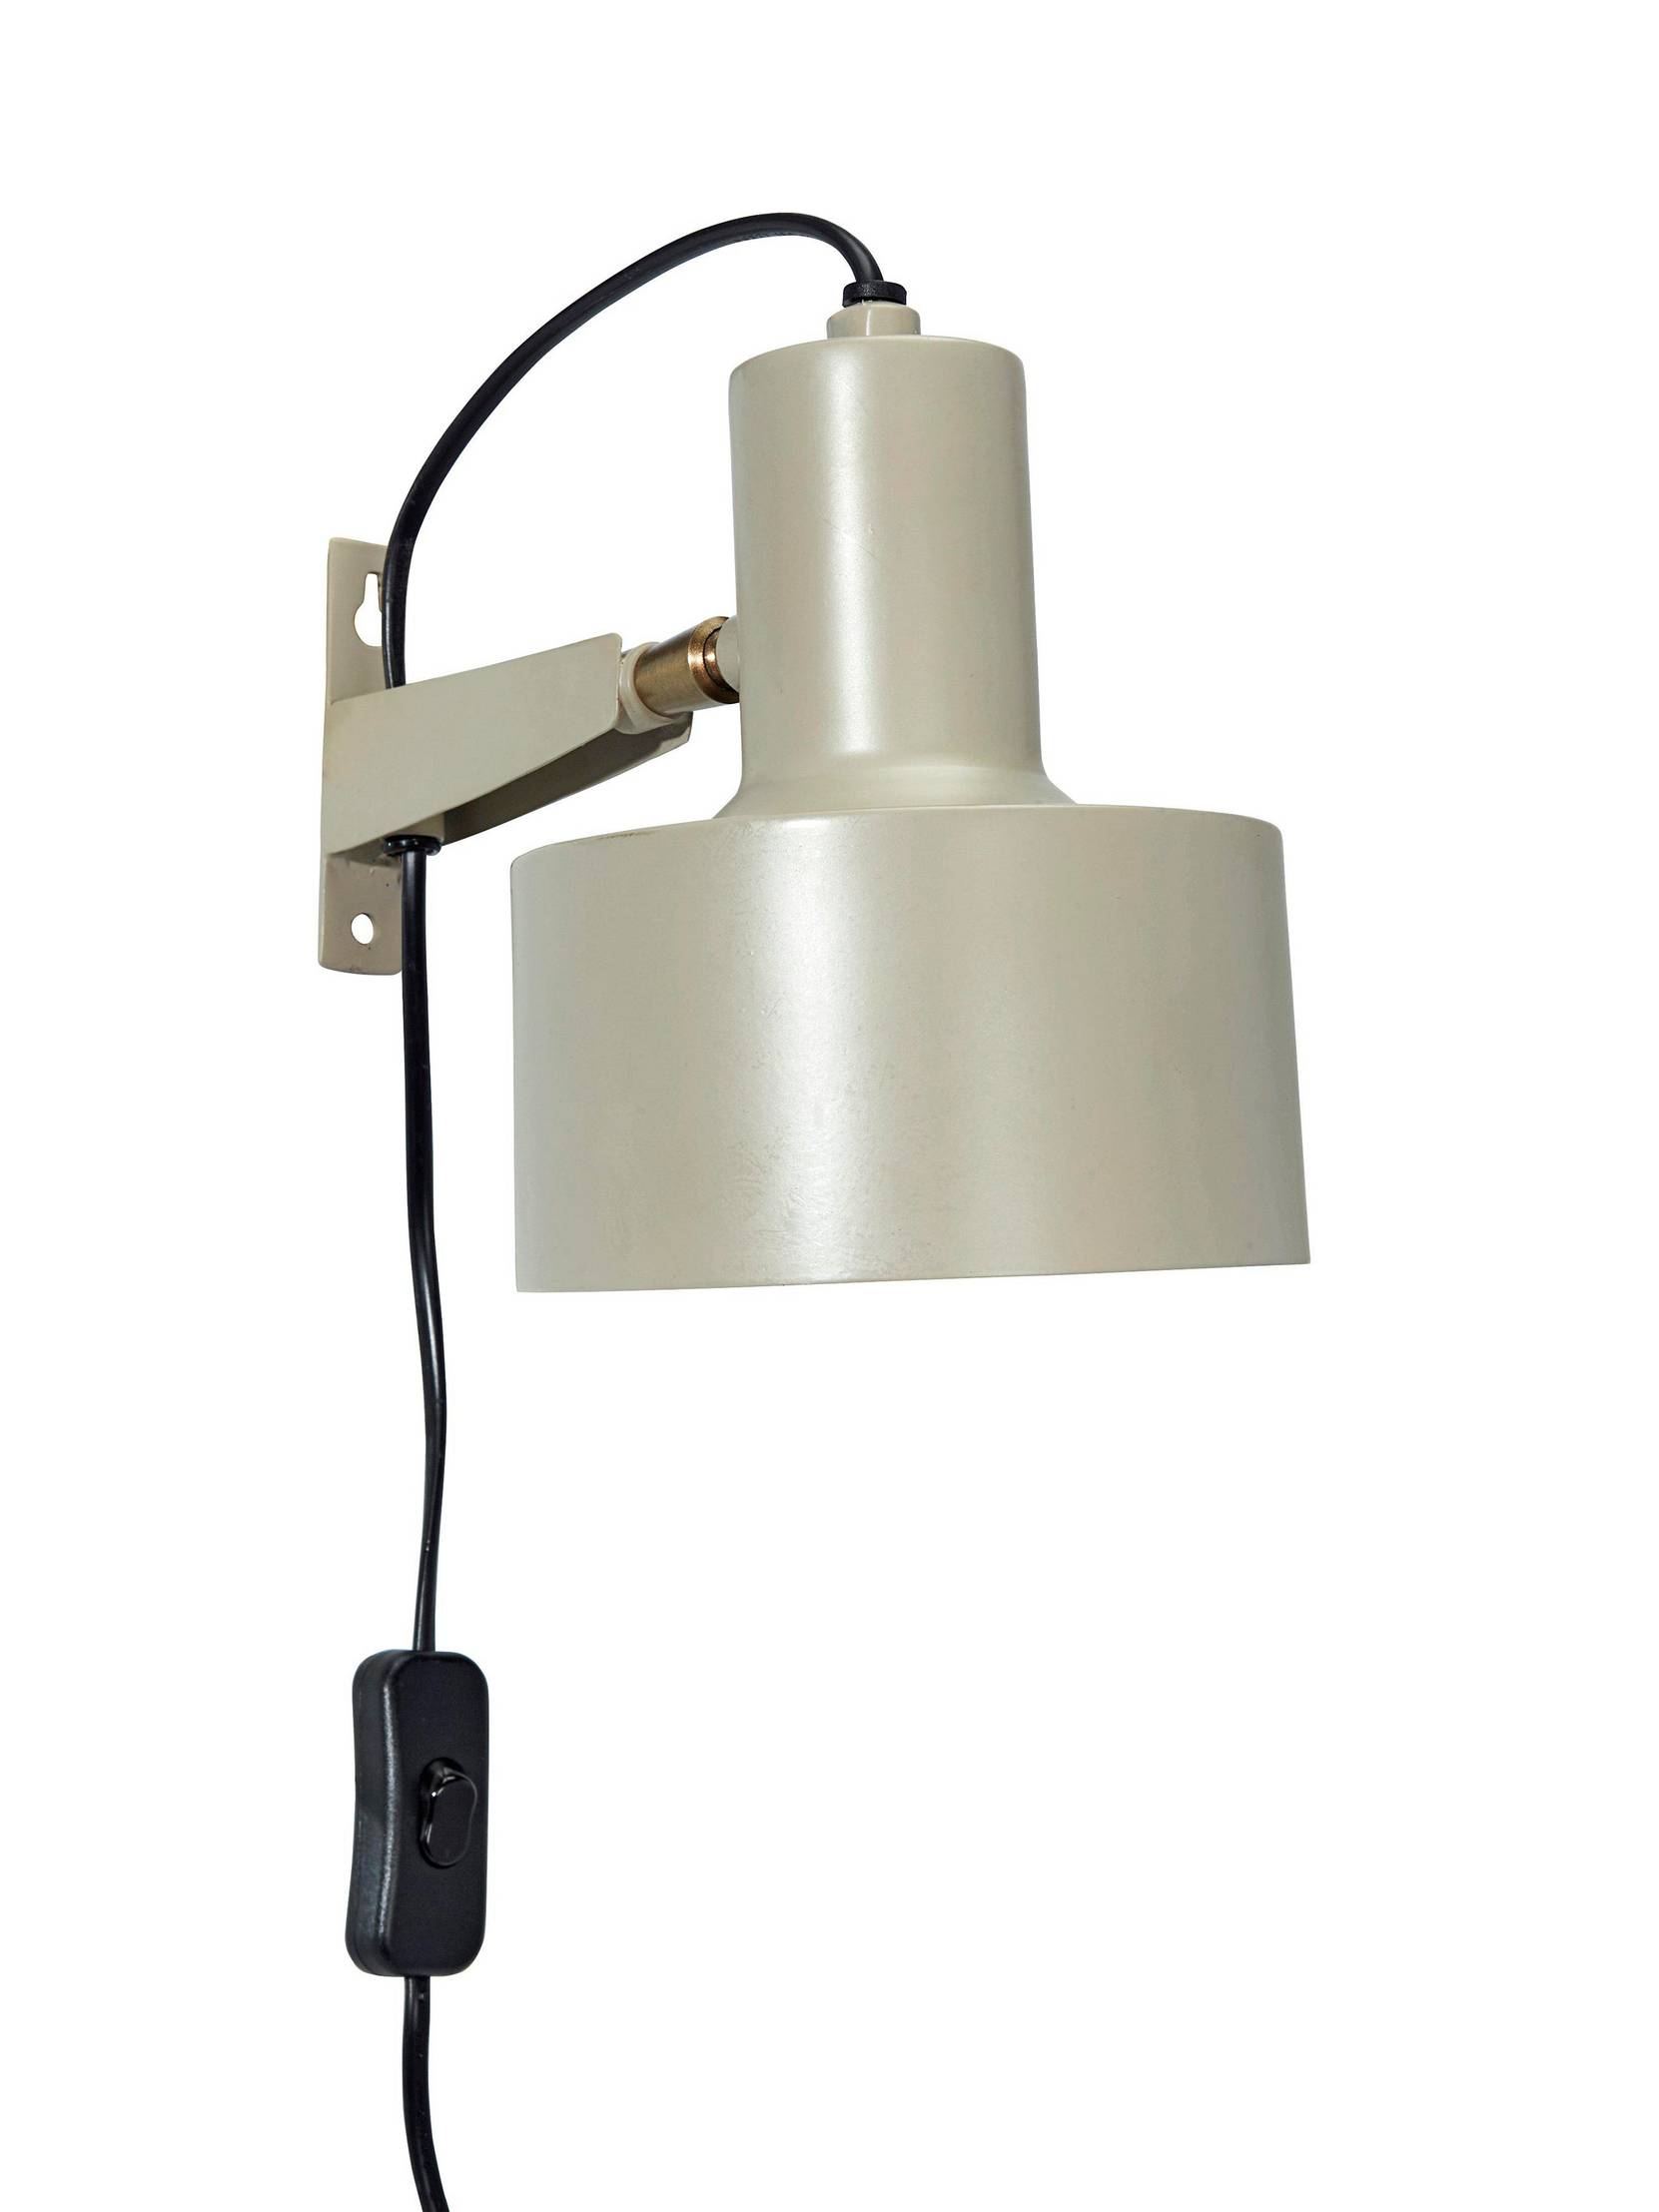 PR Home - Vägglampa Solo 23 cm - Beige